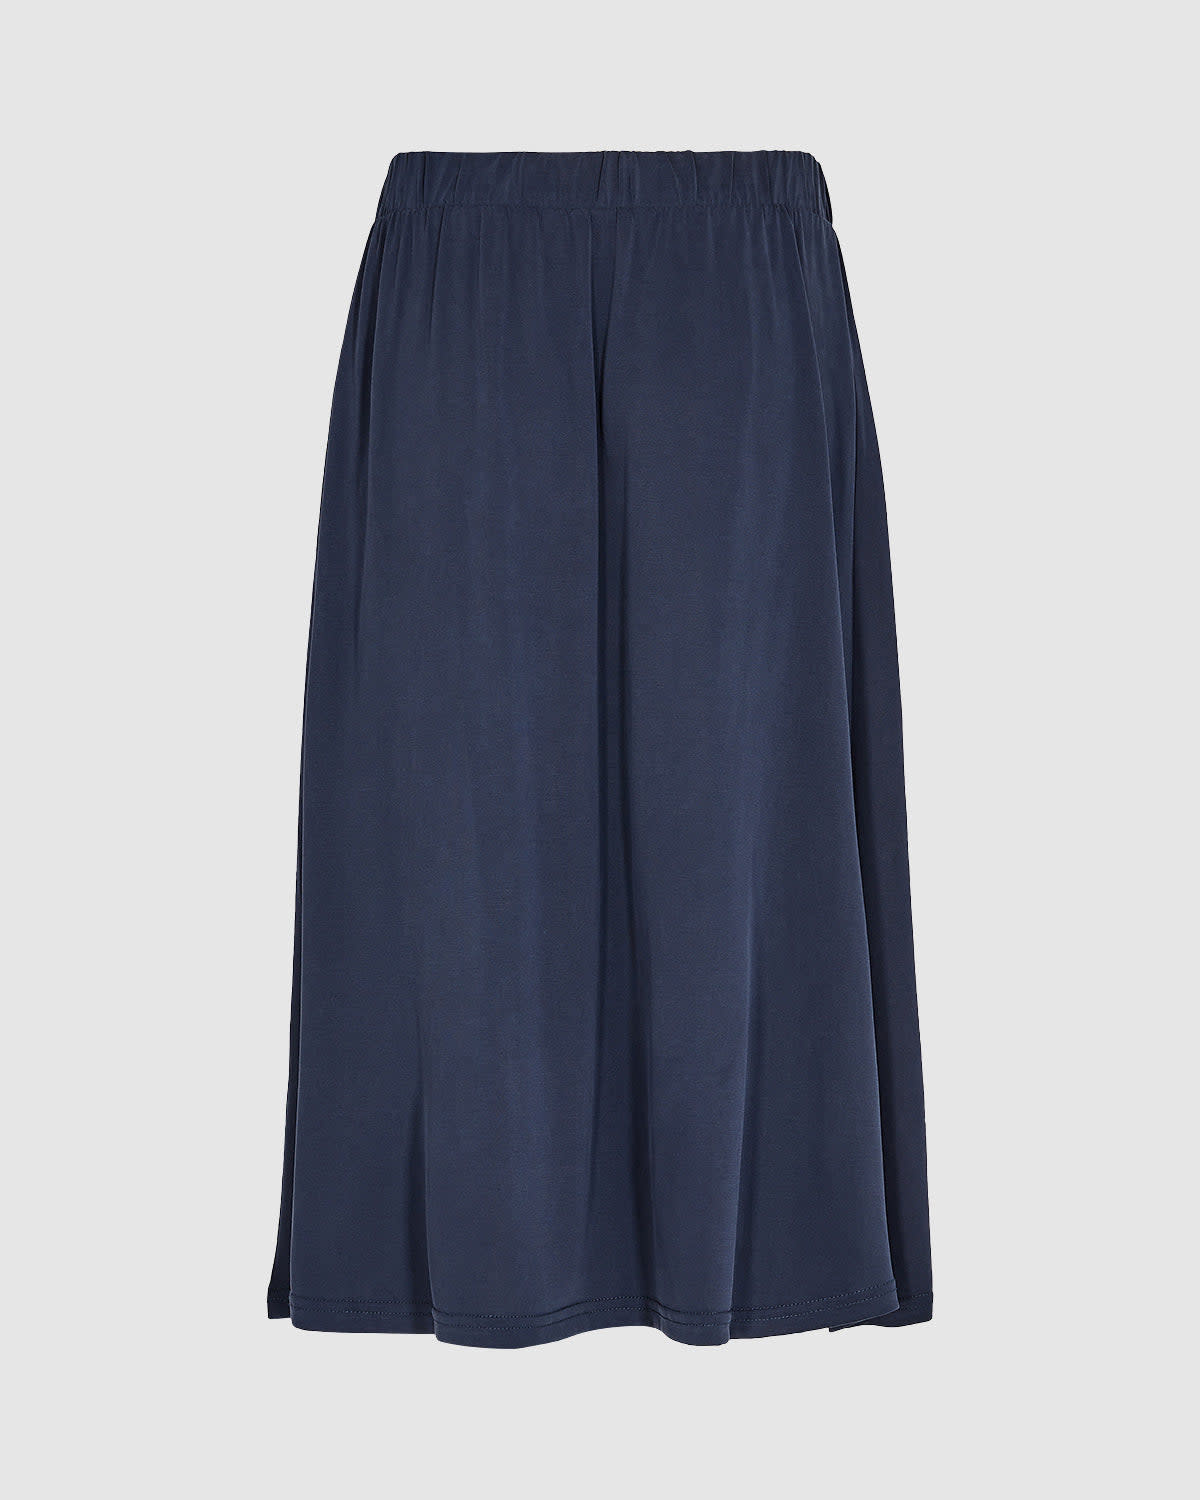 Minimum Minimum, Regisse Skirt, navy blazer, XS